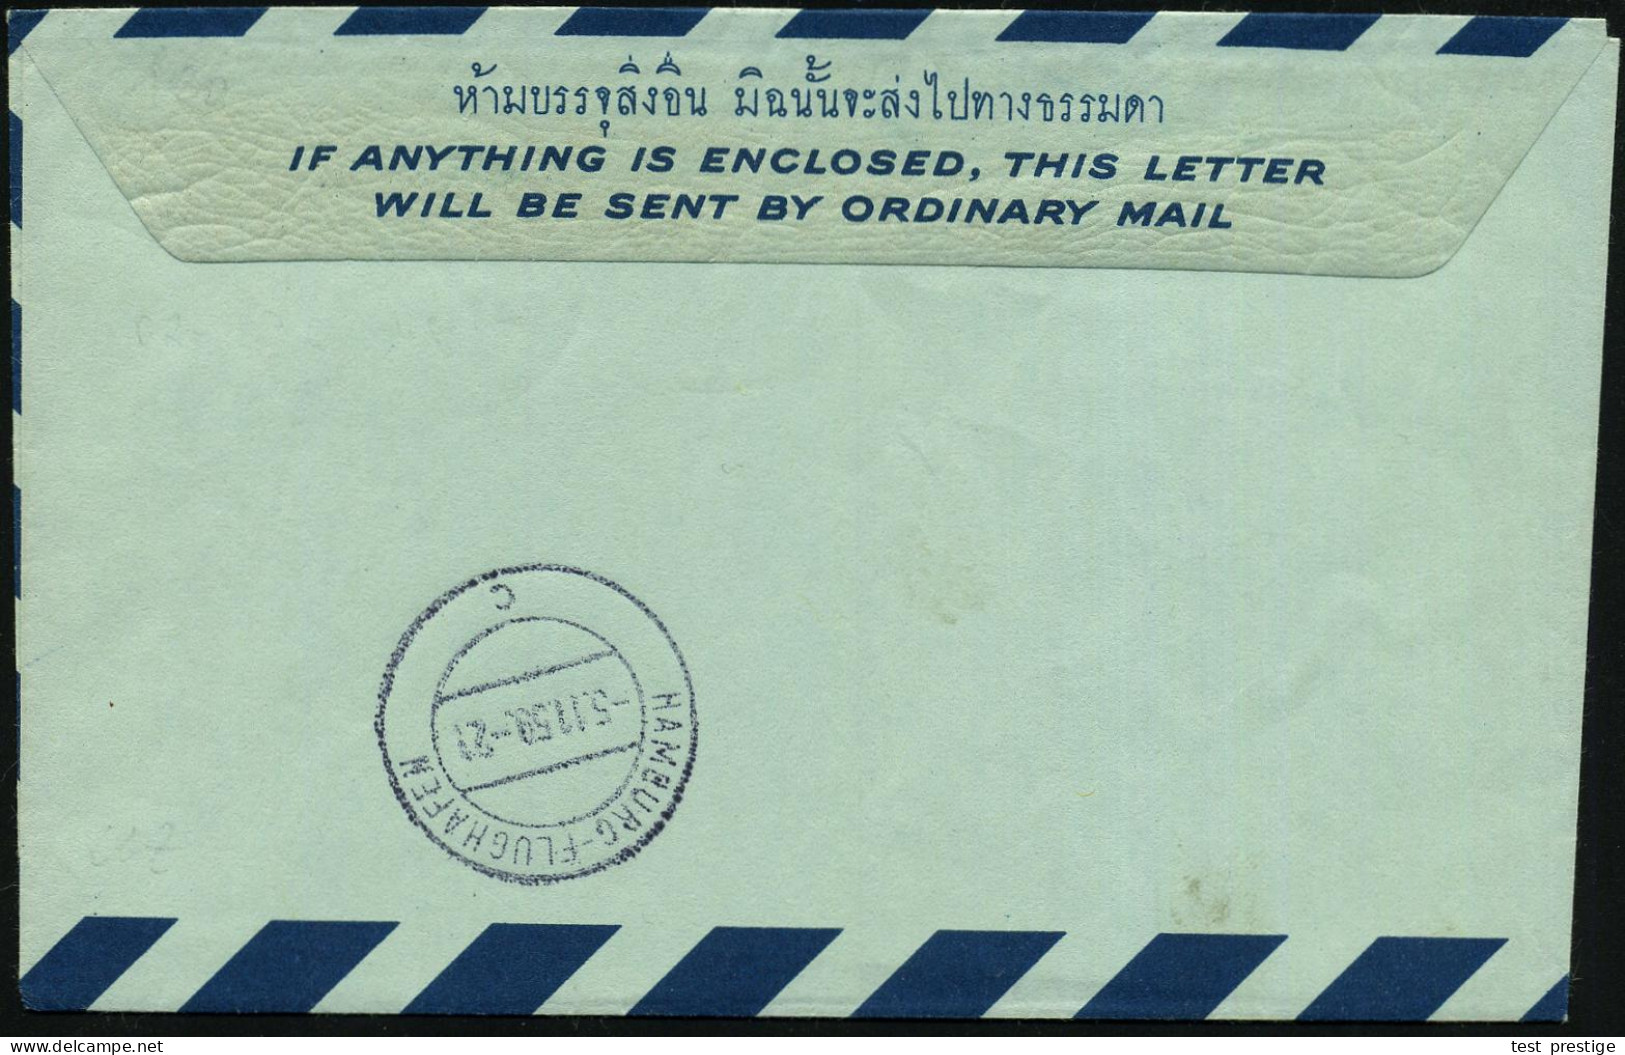 THAILAND 1959 (4.1.) 3 B. Aerogramm "Garuda", Blau , 1K-Brücke: BANGKOK + Viol. HdN: LUFTHANSA/ BANGKOK - HAMBURG / .. F - Other (Air)